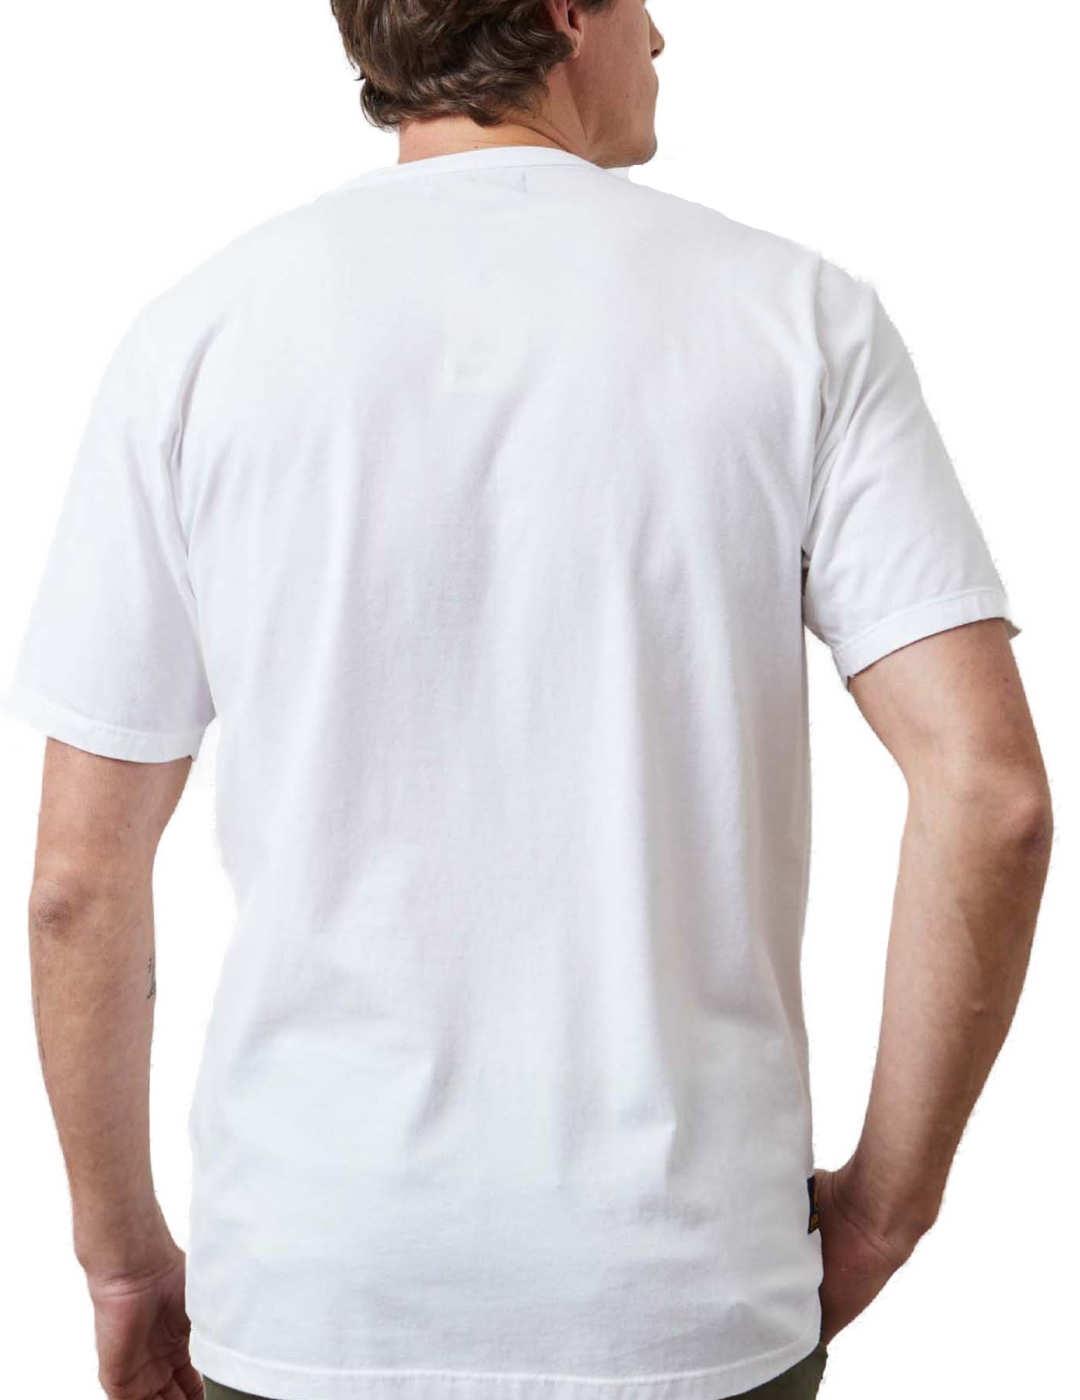 Camiseta Altonadock blanco cocodrilo manga corta para hombre